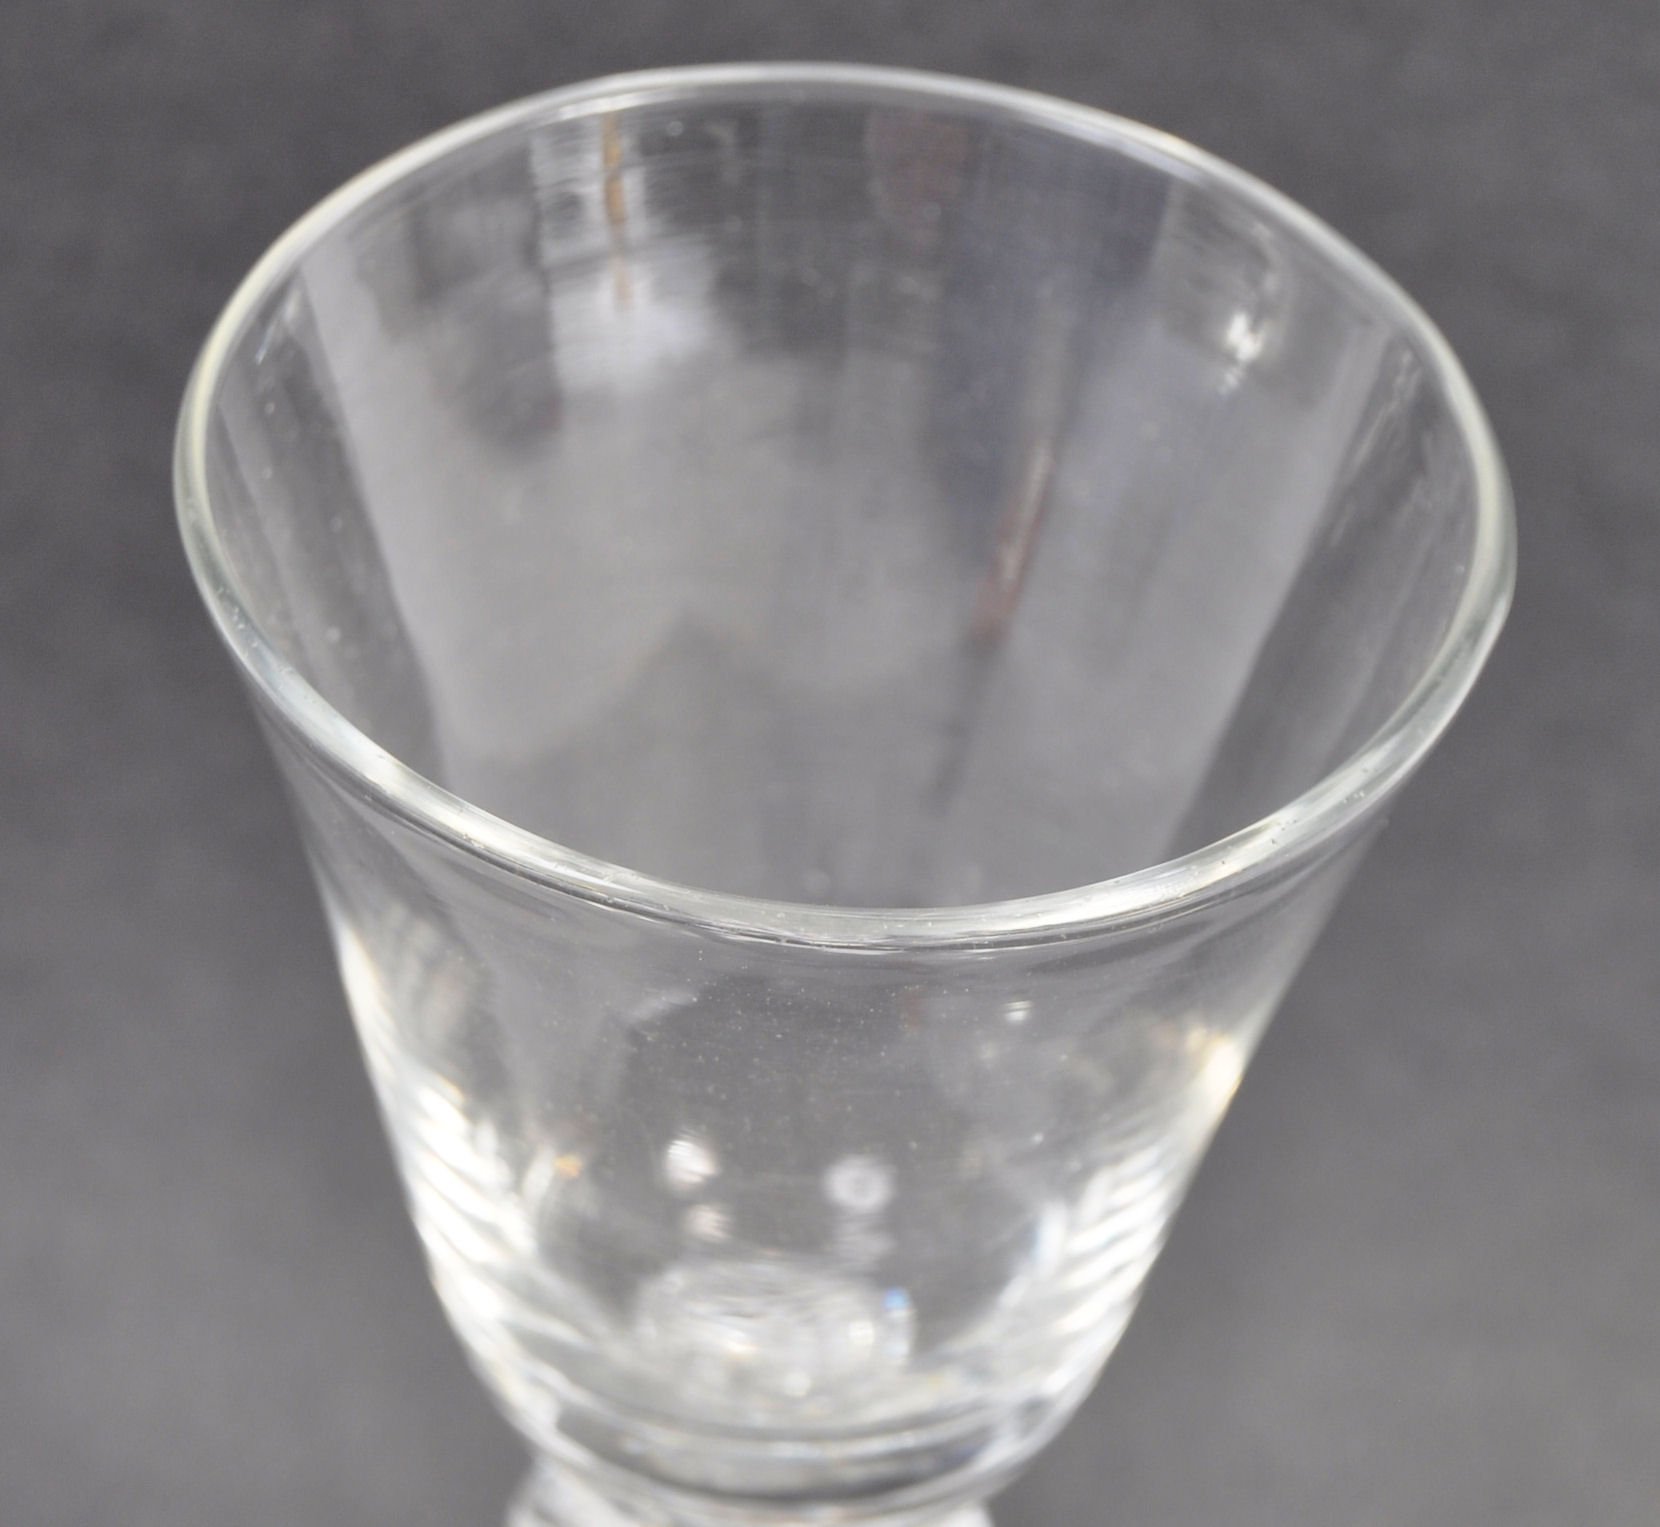 STUNNING MID 18TH CENTURY GEORGIAN AIR TWIST STEM WINE GLASS - Image 2 of 4